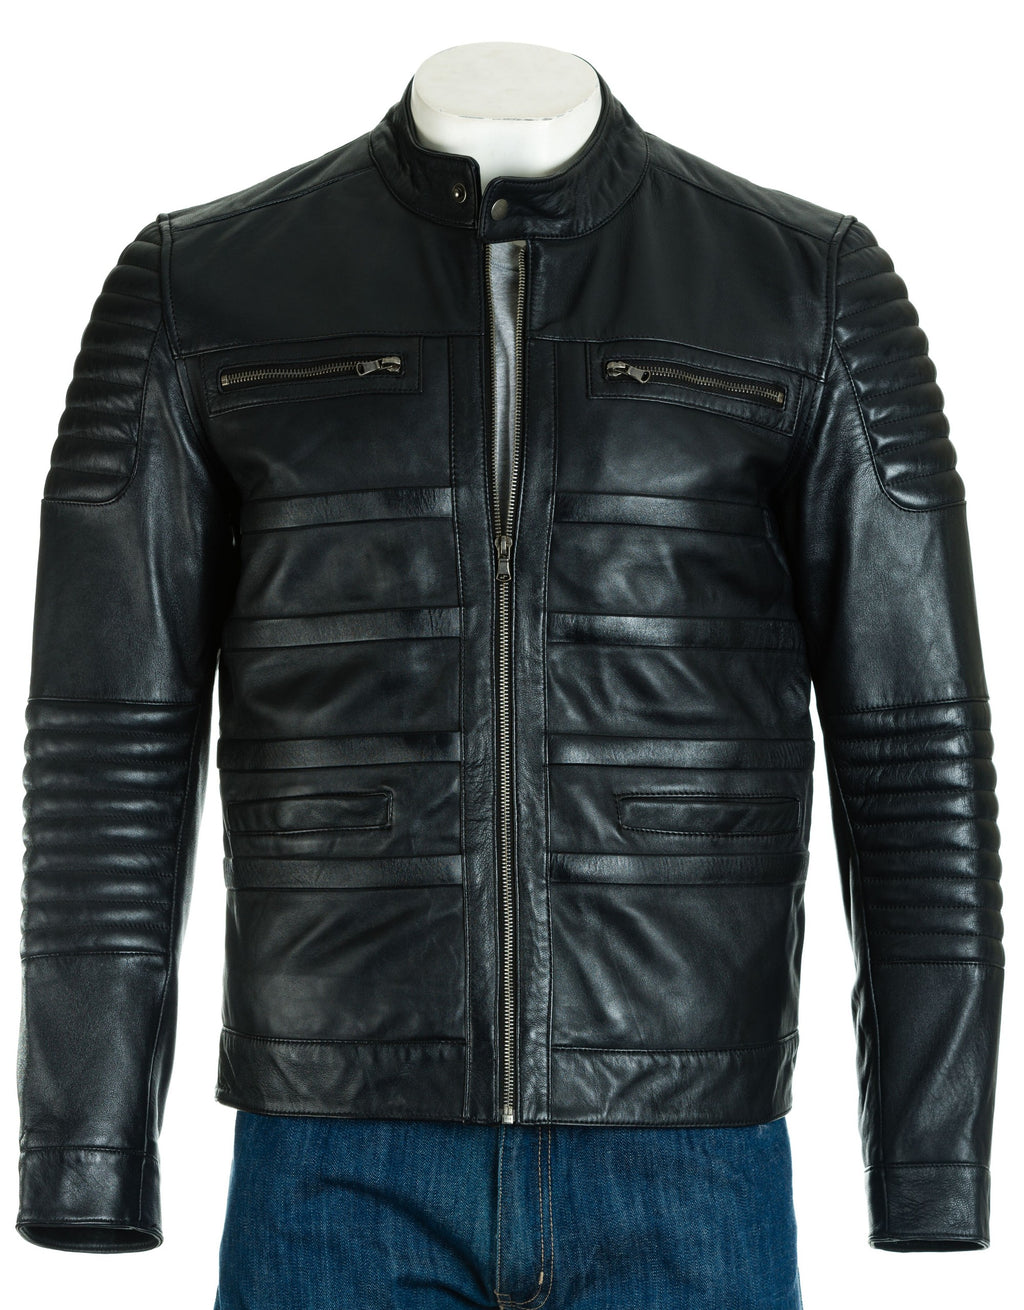 Men's Leather Biker Jacket with Horizontal Banding: Como